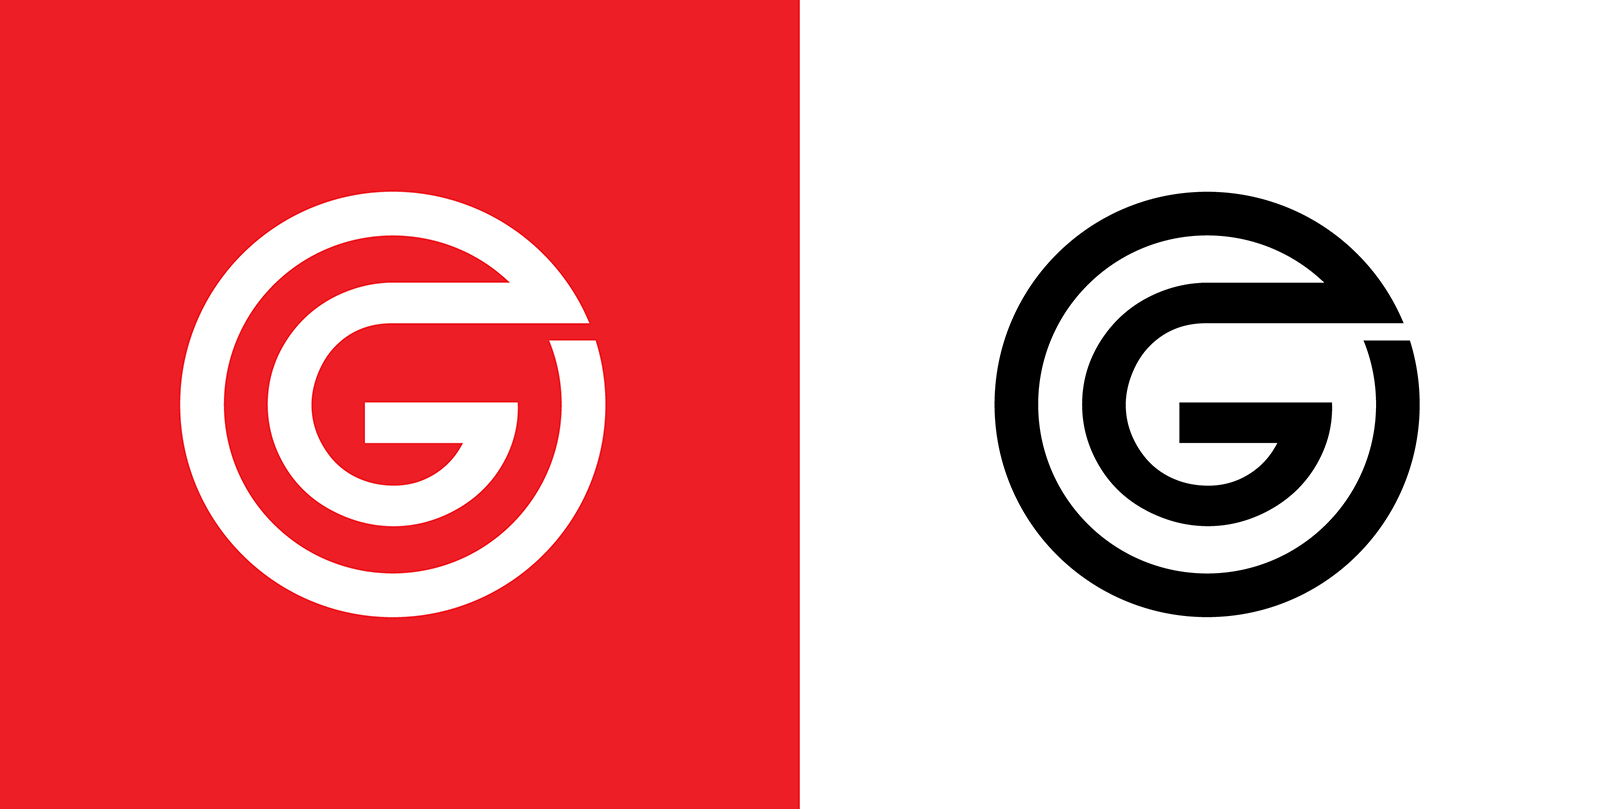 Letter og, go abstract company or brand Logo Design